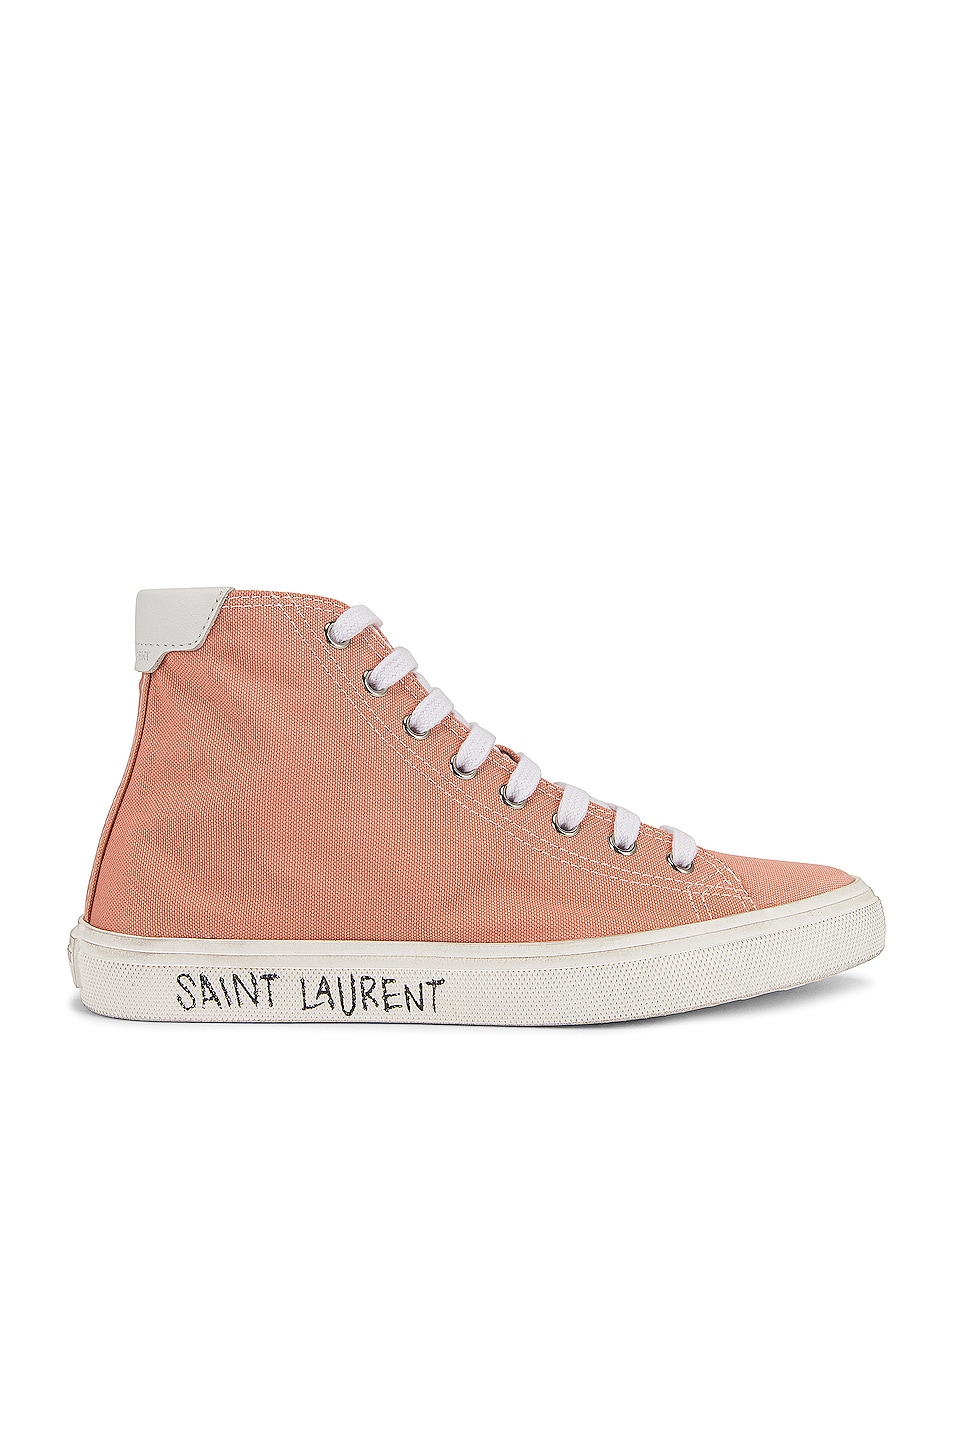 Image 1 of Saint Laurent Malibu Mid Top Signature Sneakers in Ballet Pink & Blanc Optique